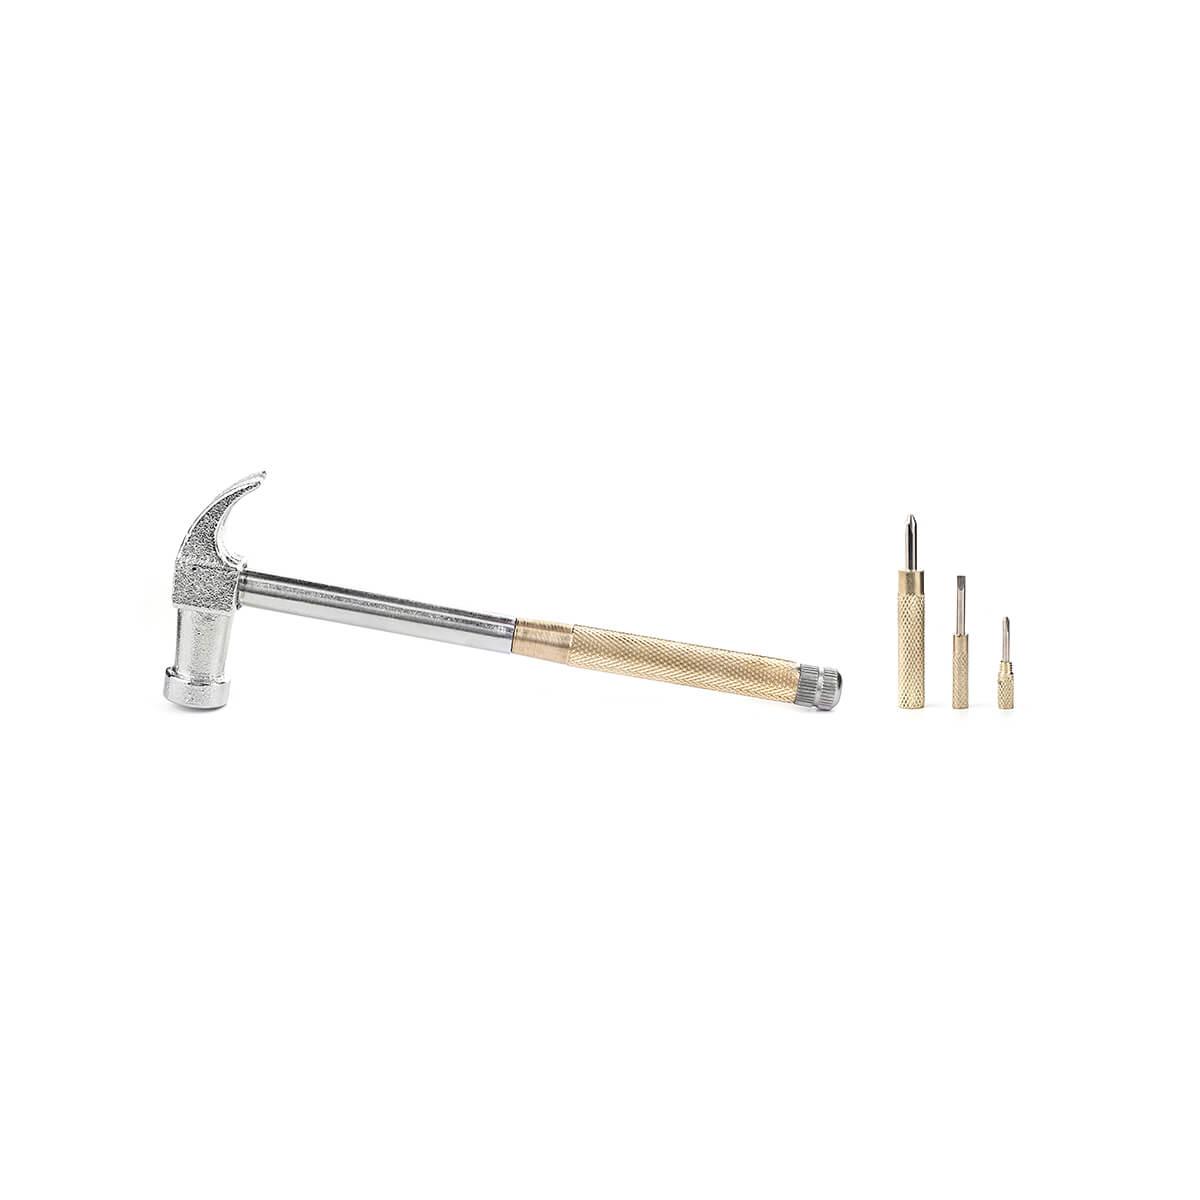  Hammer Multi Tool